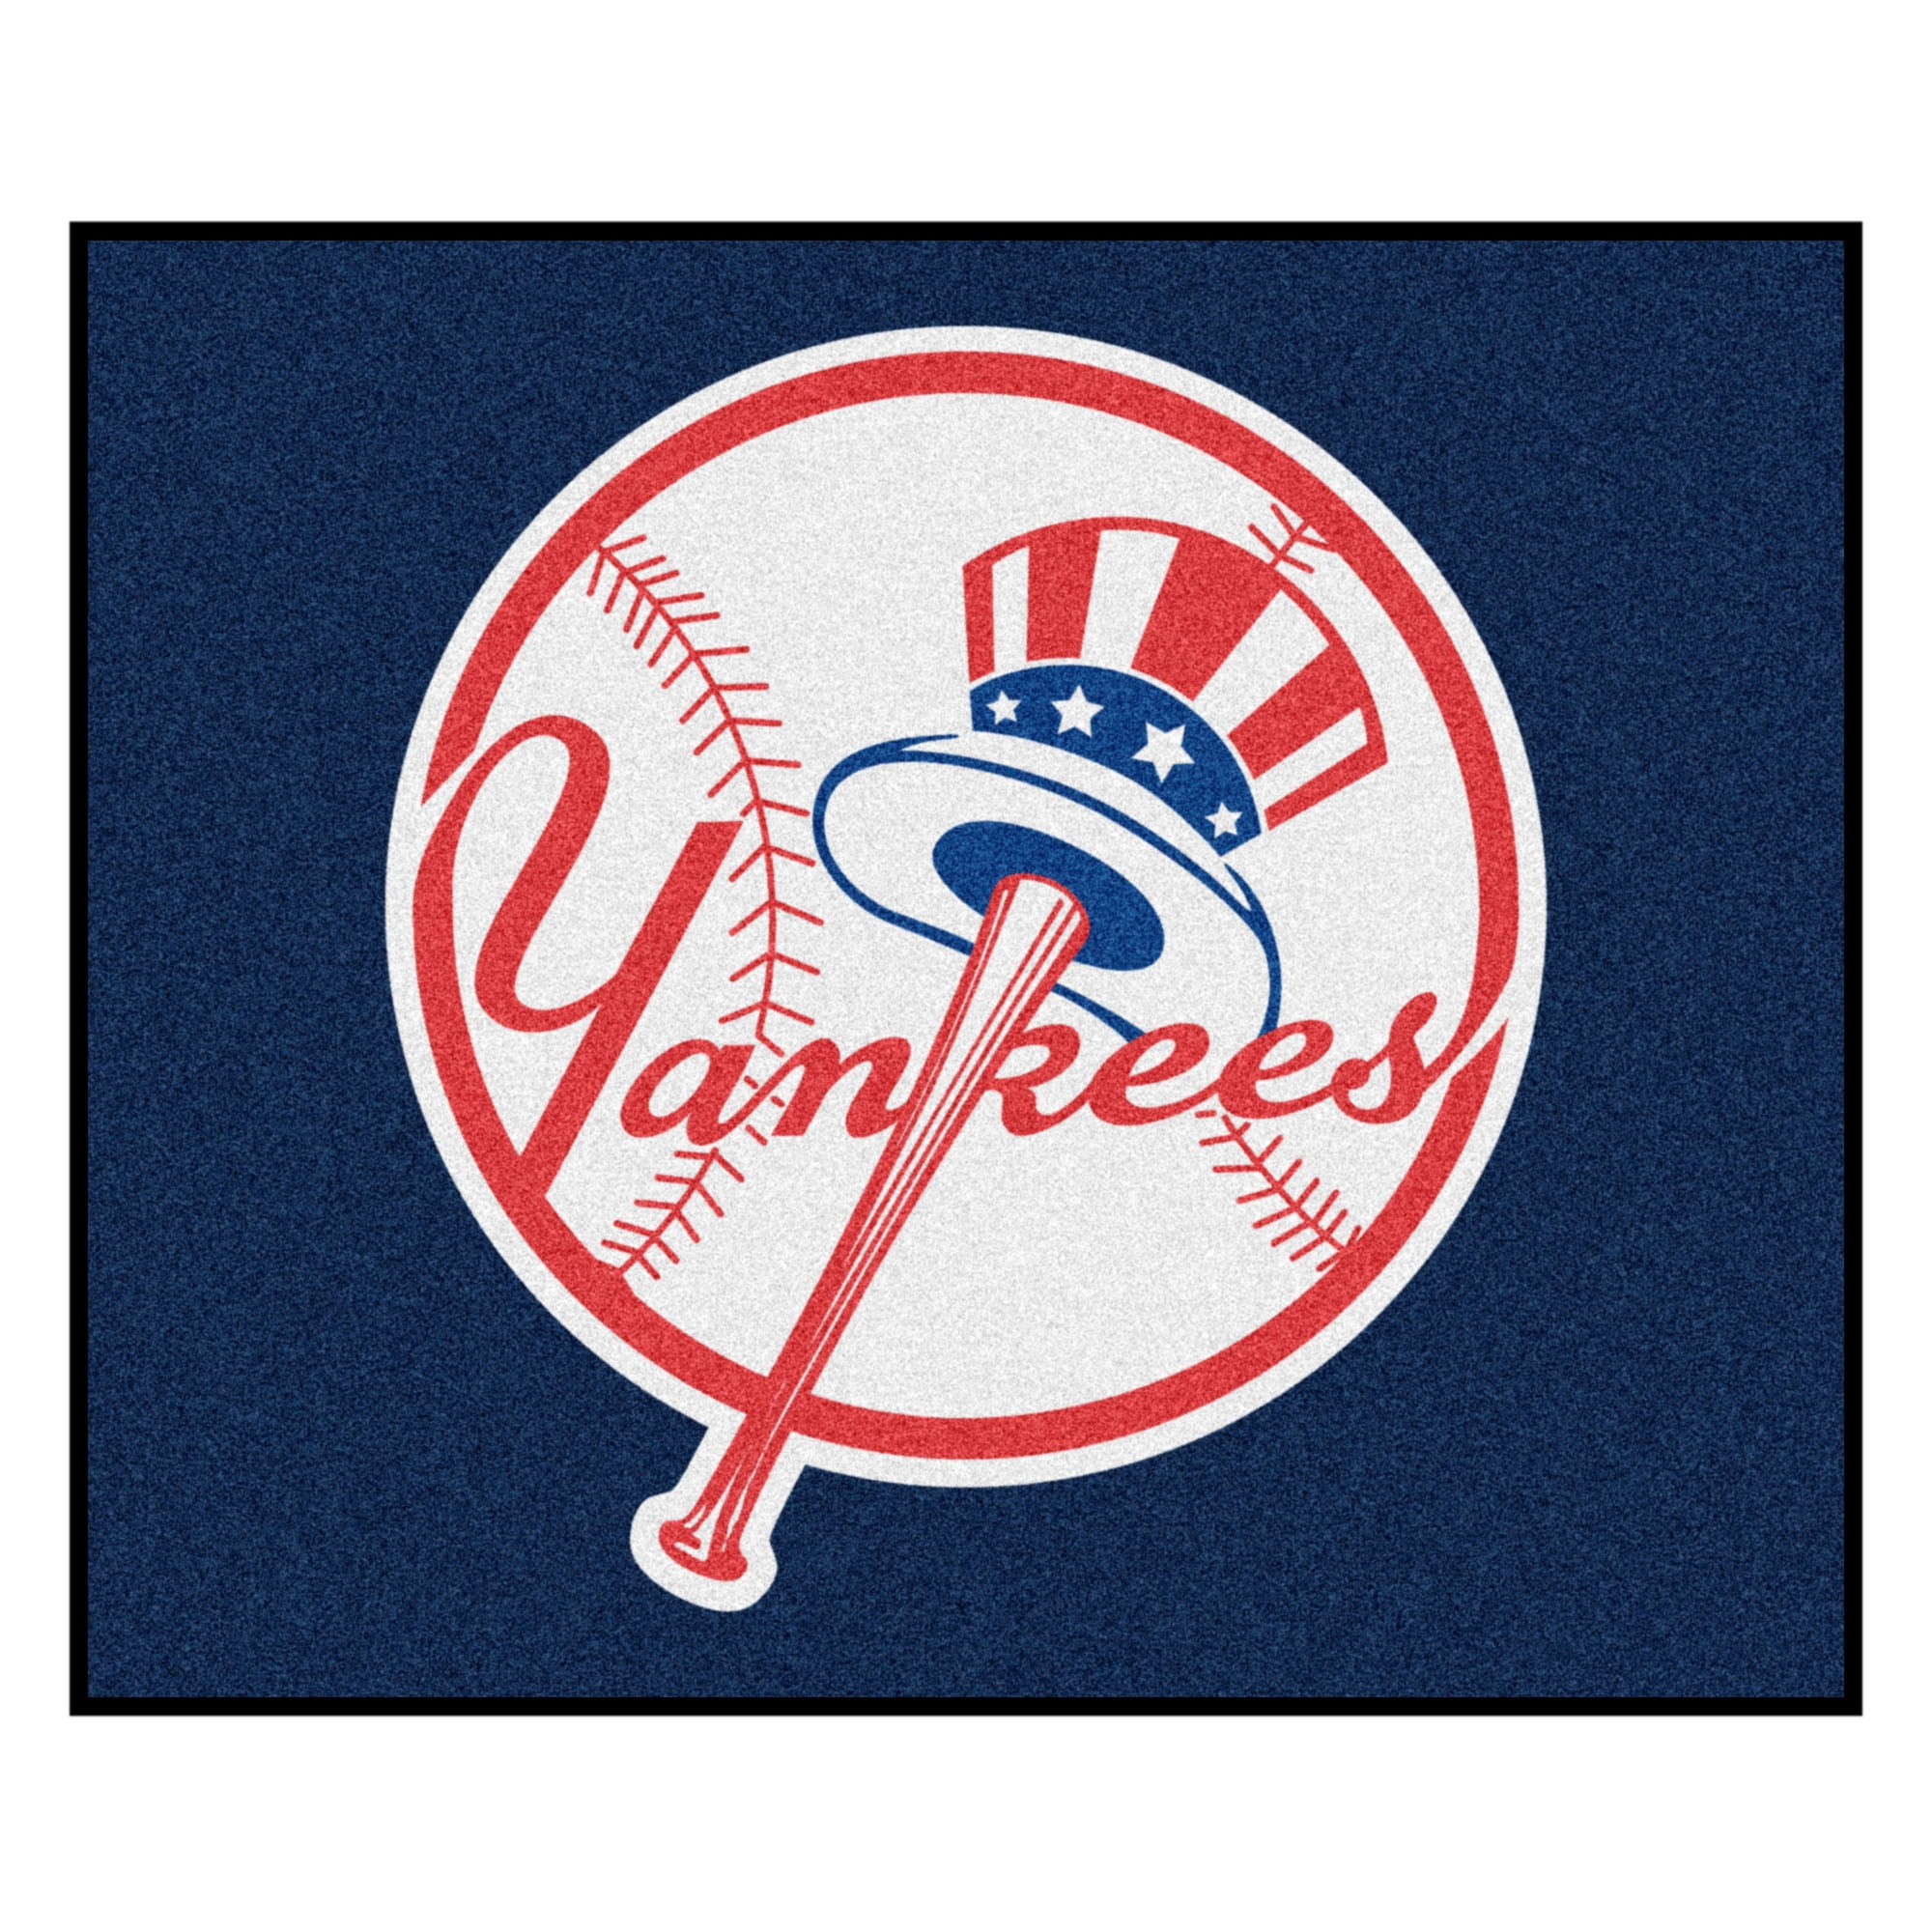 Nón MLB Logo New York Yankees Black 32CP50111 50L  O   GIAYSAUVN